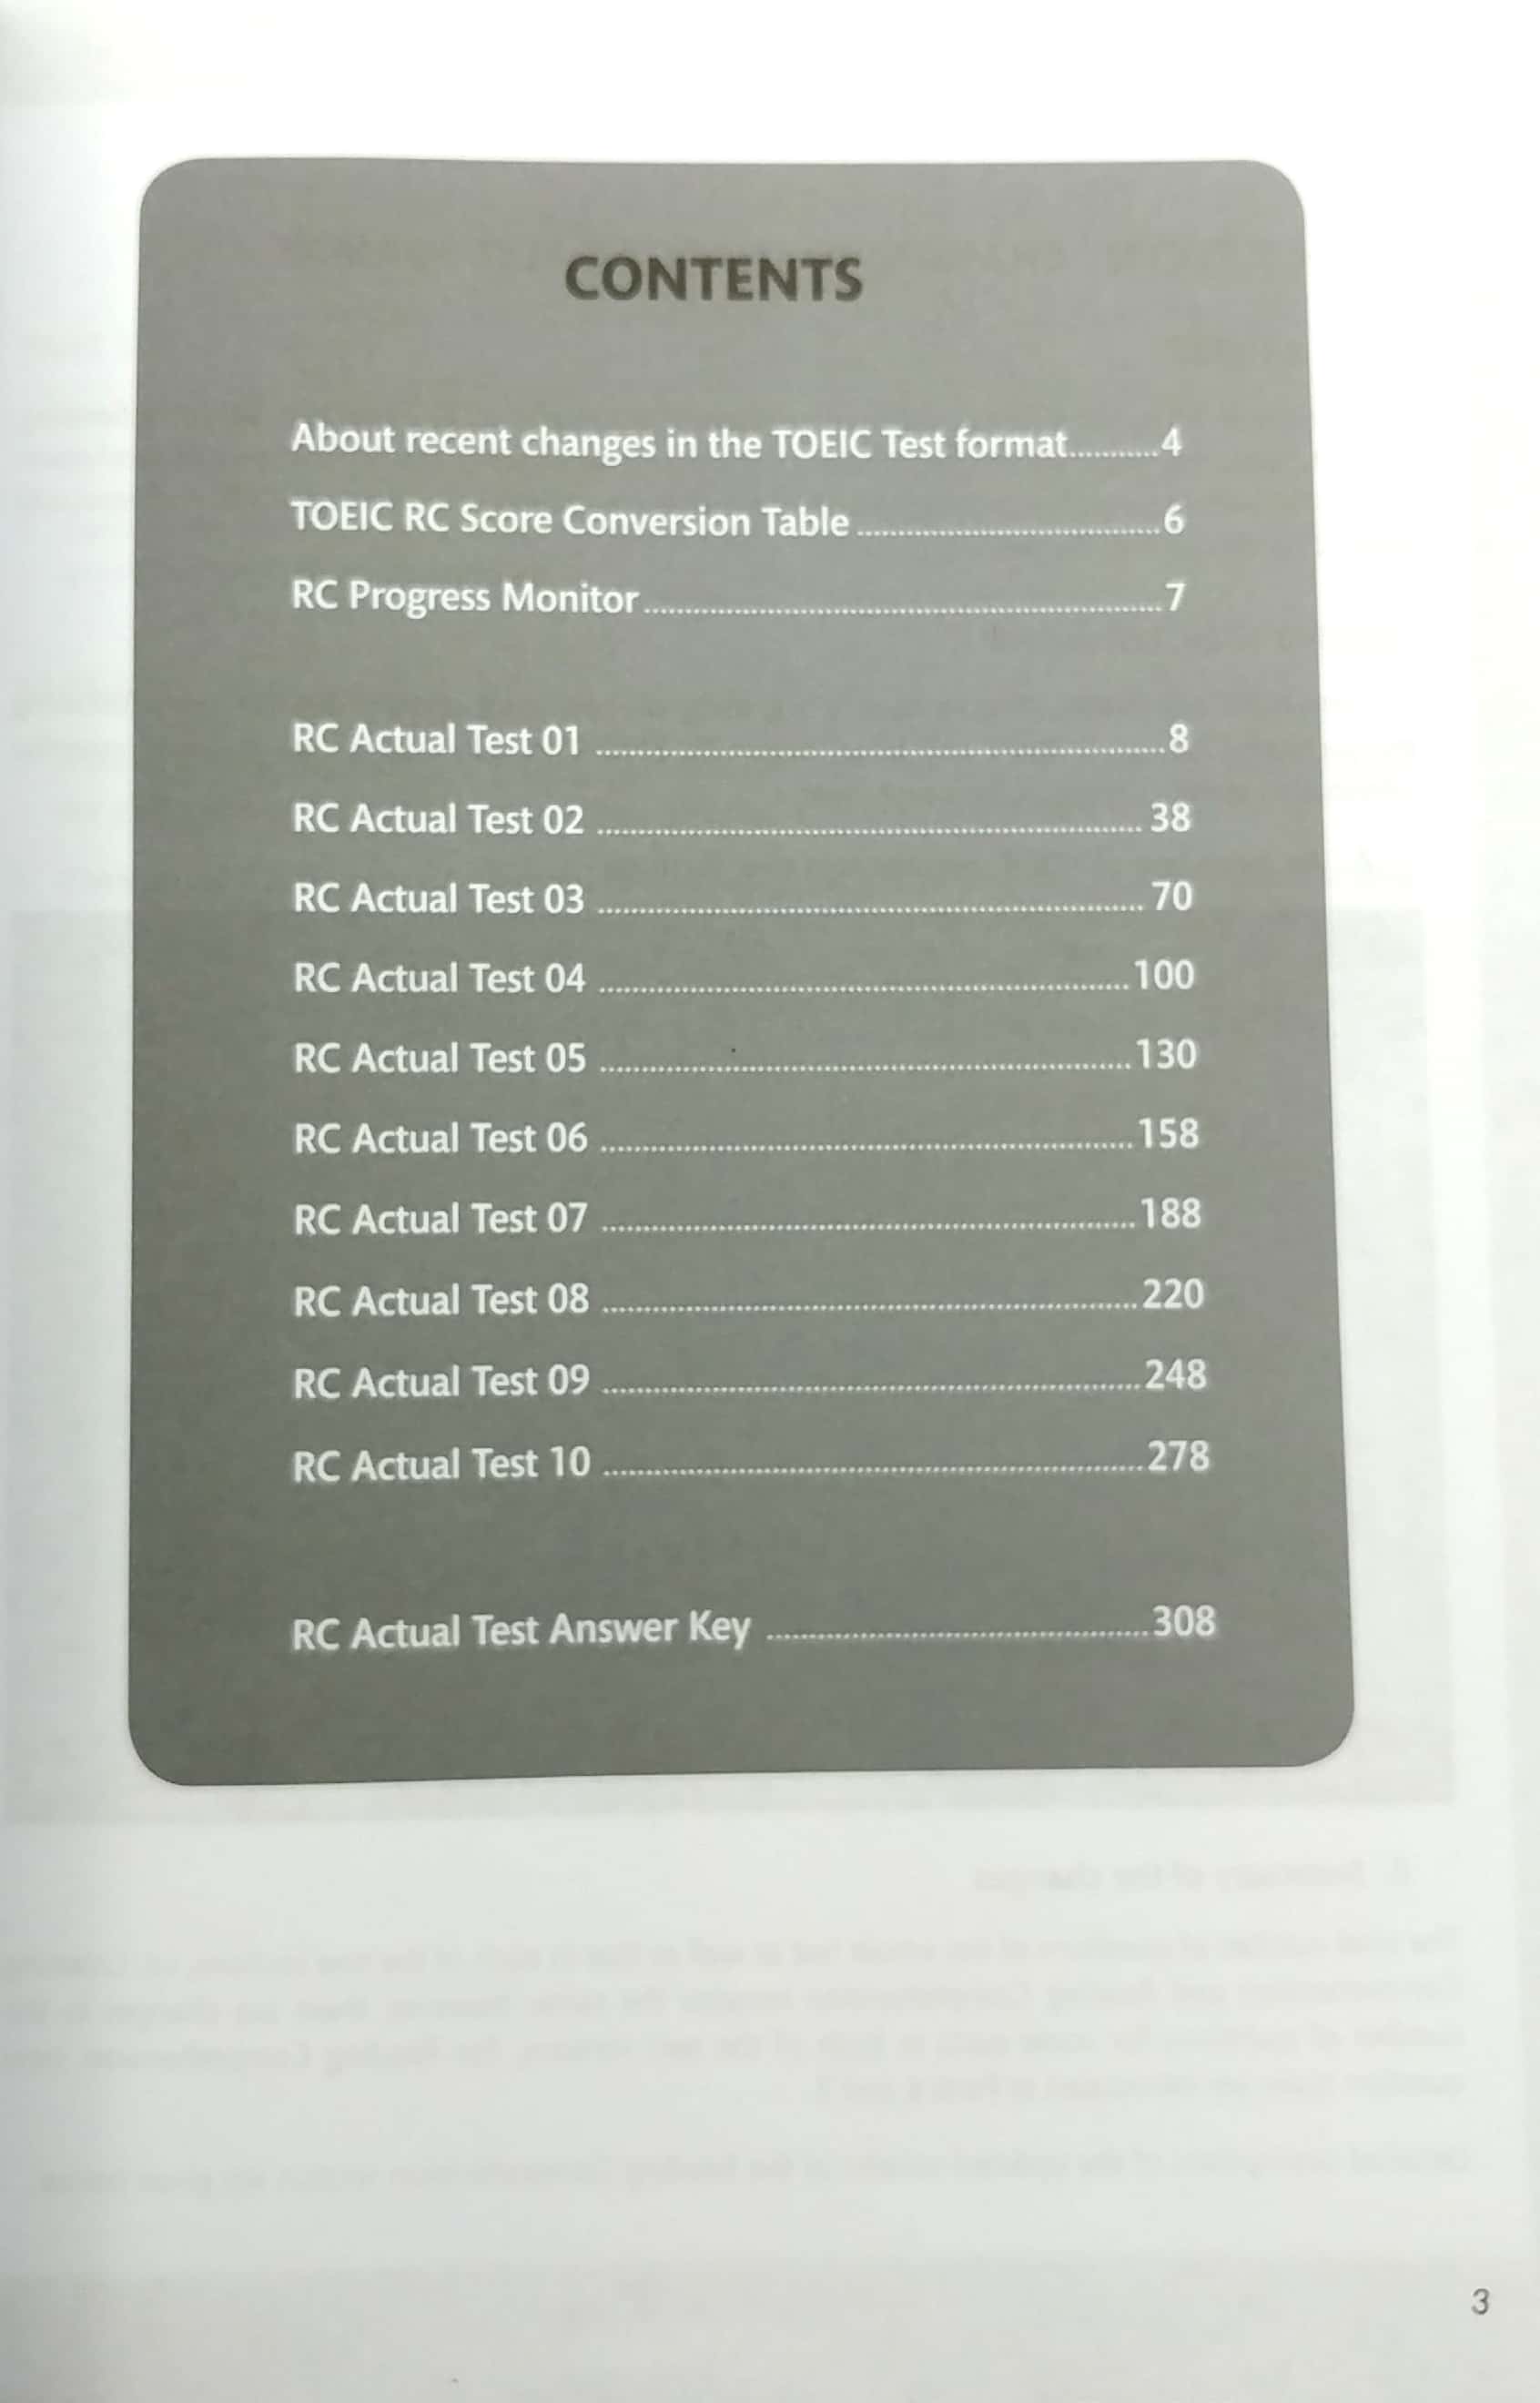 New Economy Toiec RC1000 PDF